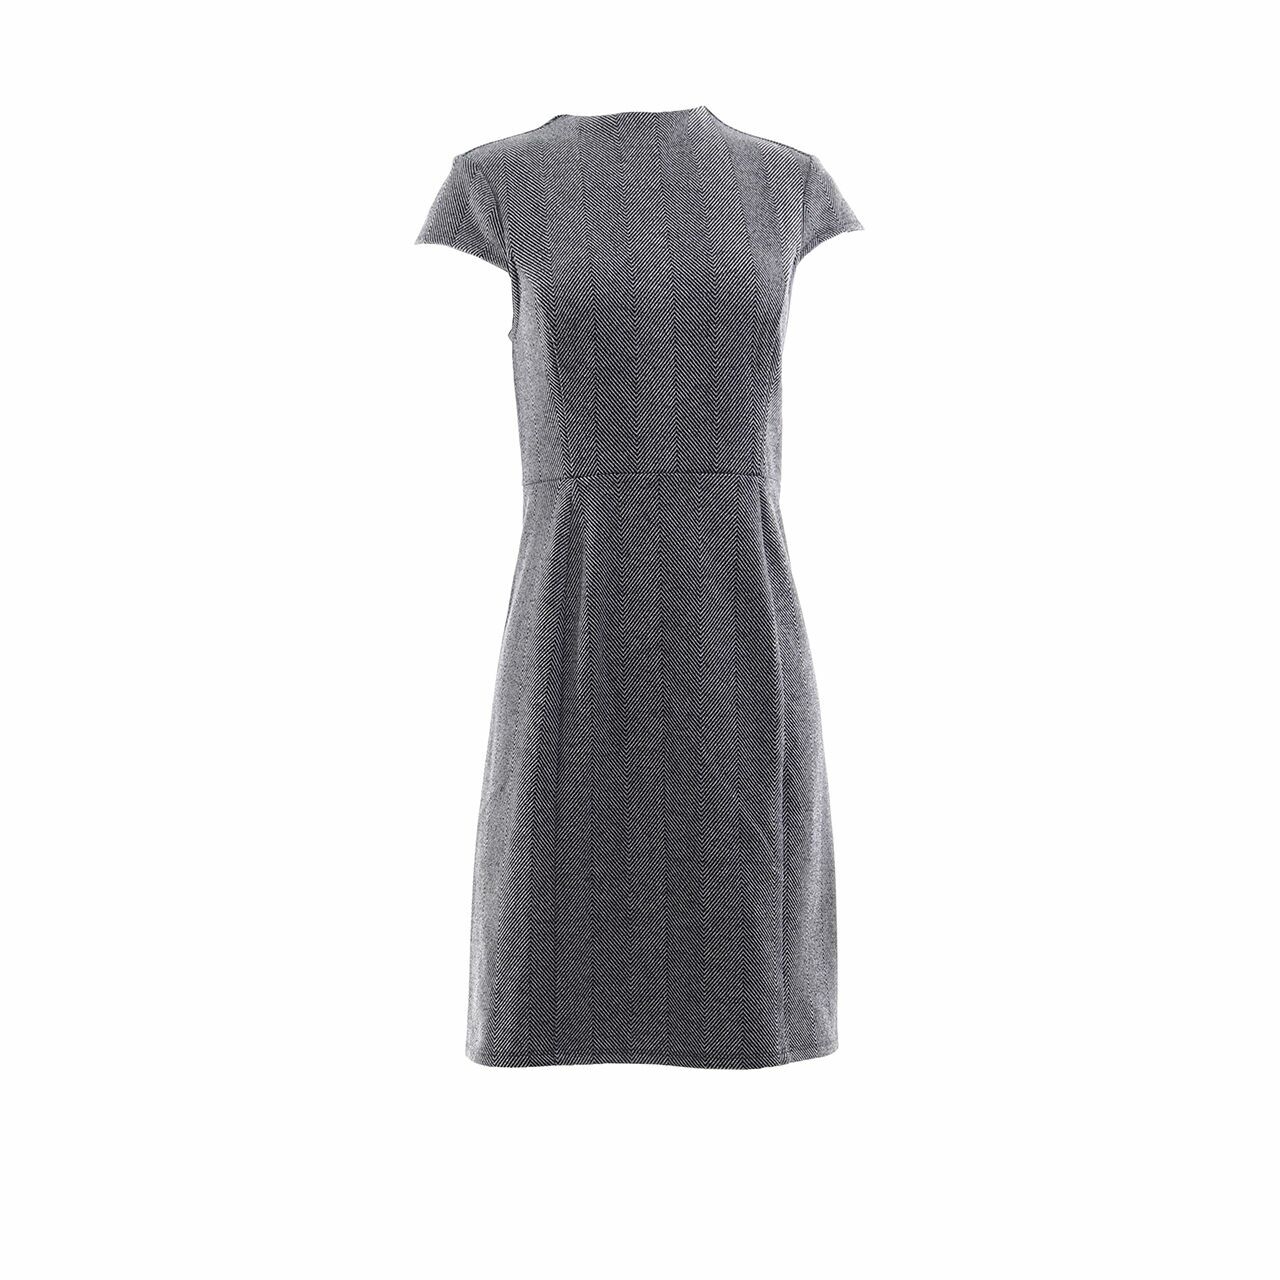 H&M Grey Patterned Mini Dress